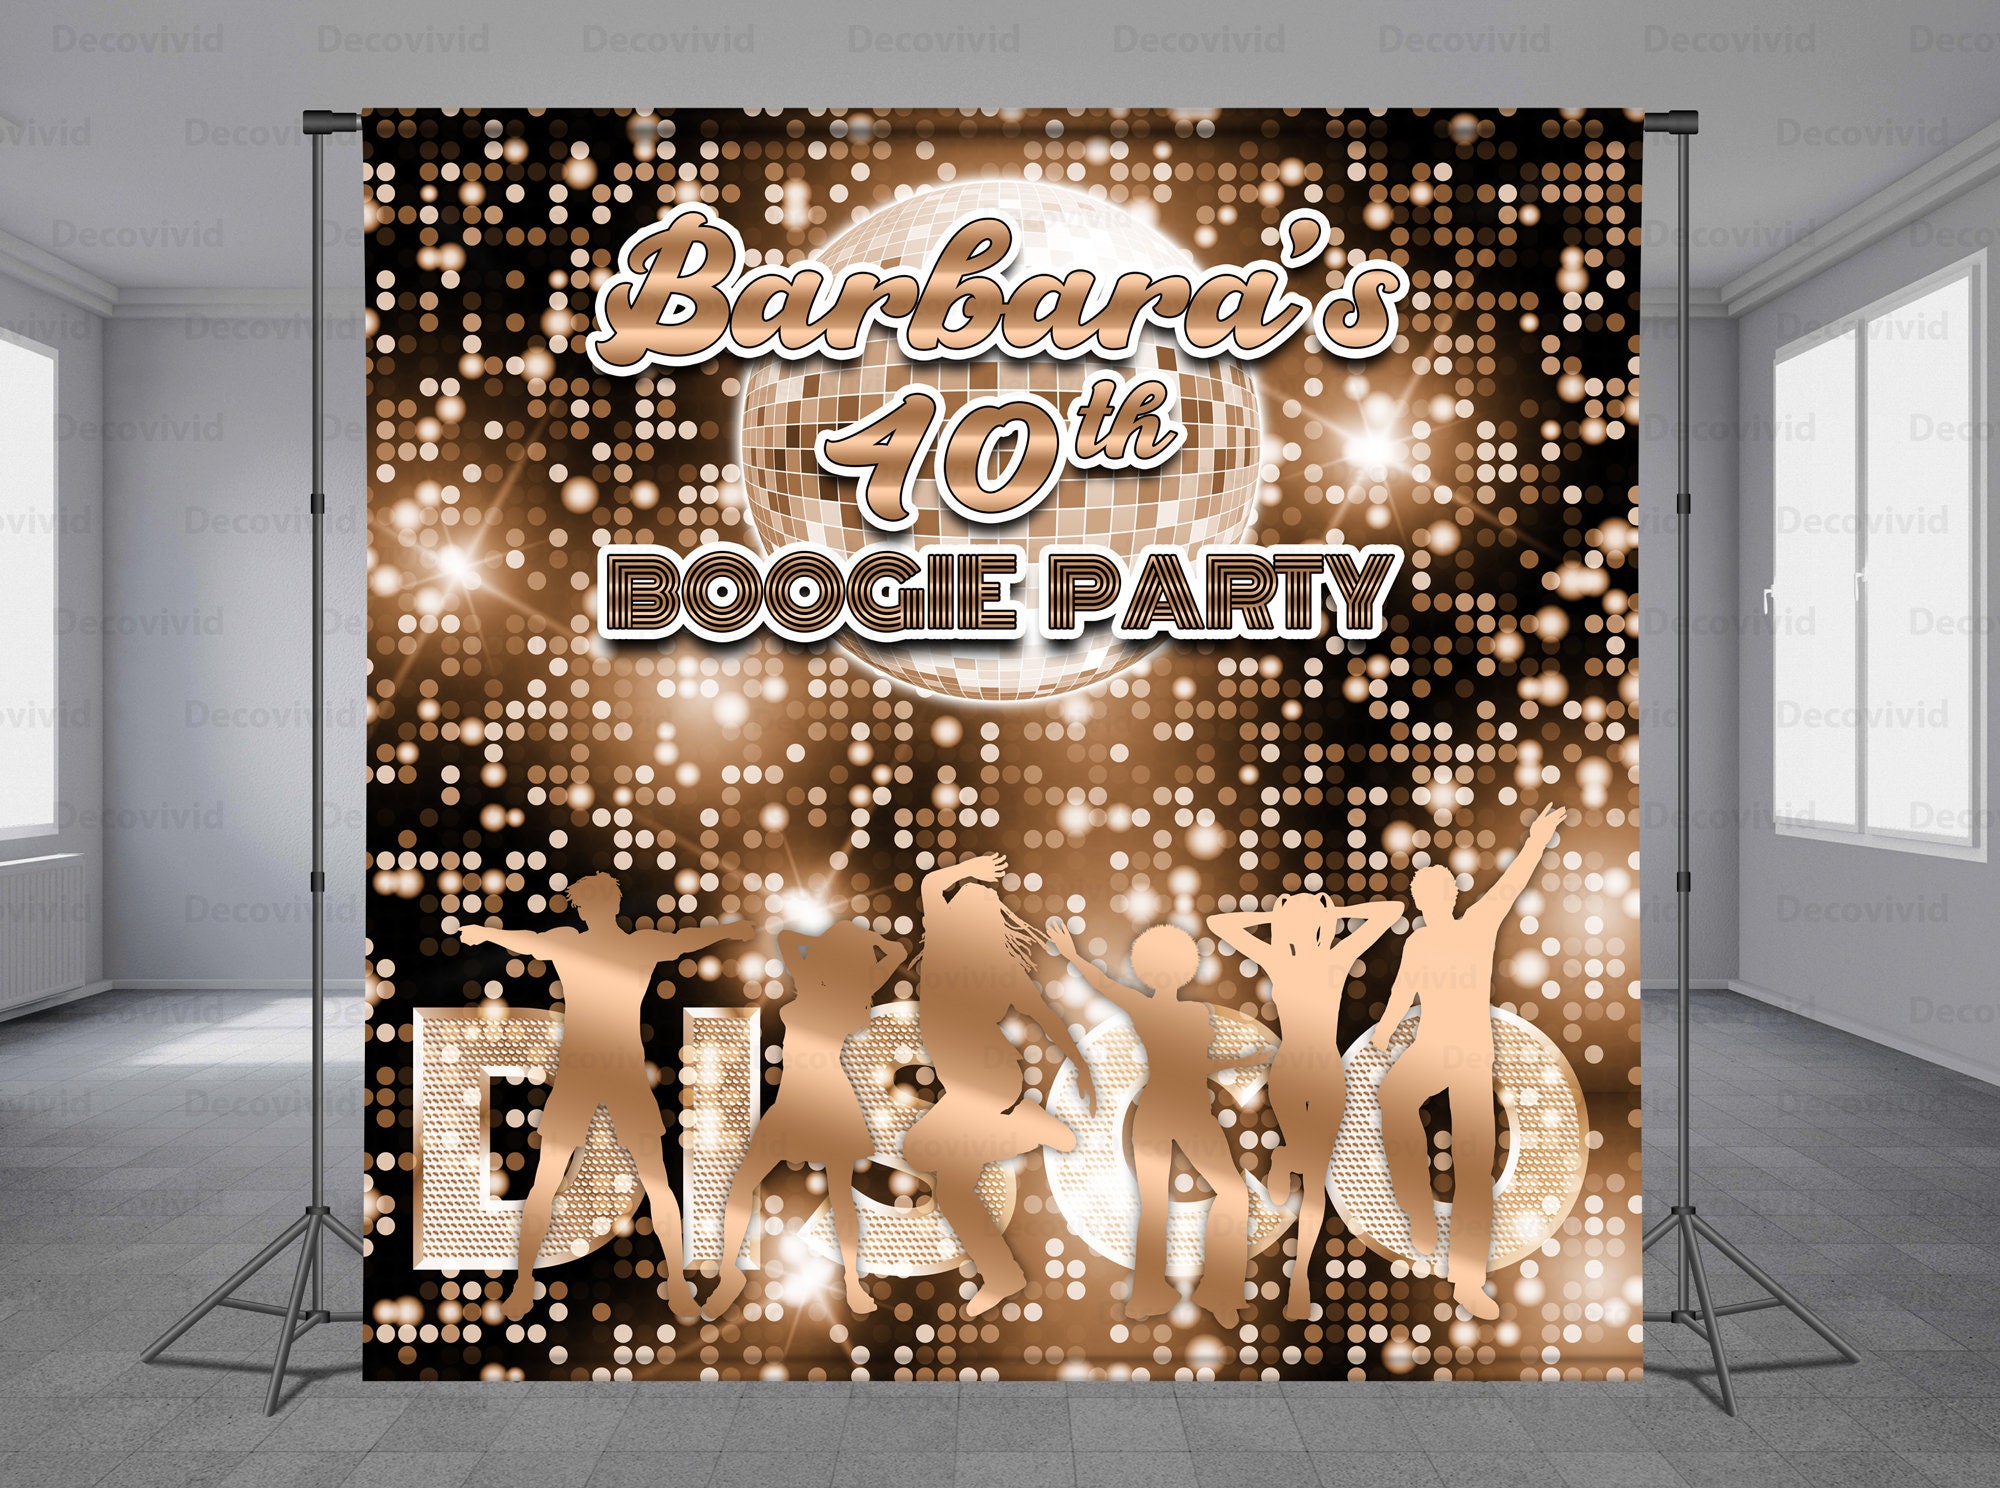 Real Disco ball gold disco fever boogie dance 70s club disco party